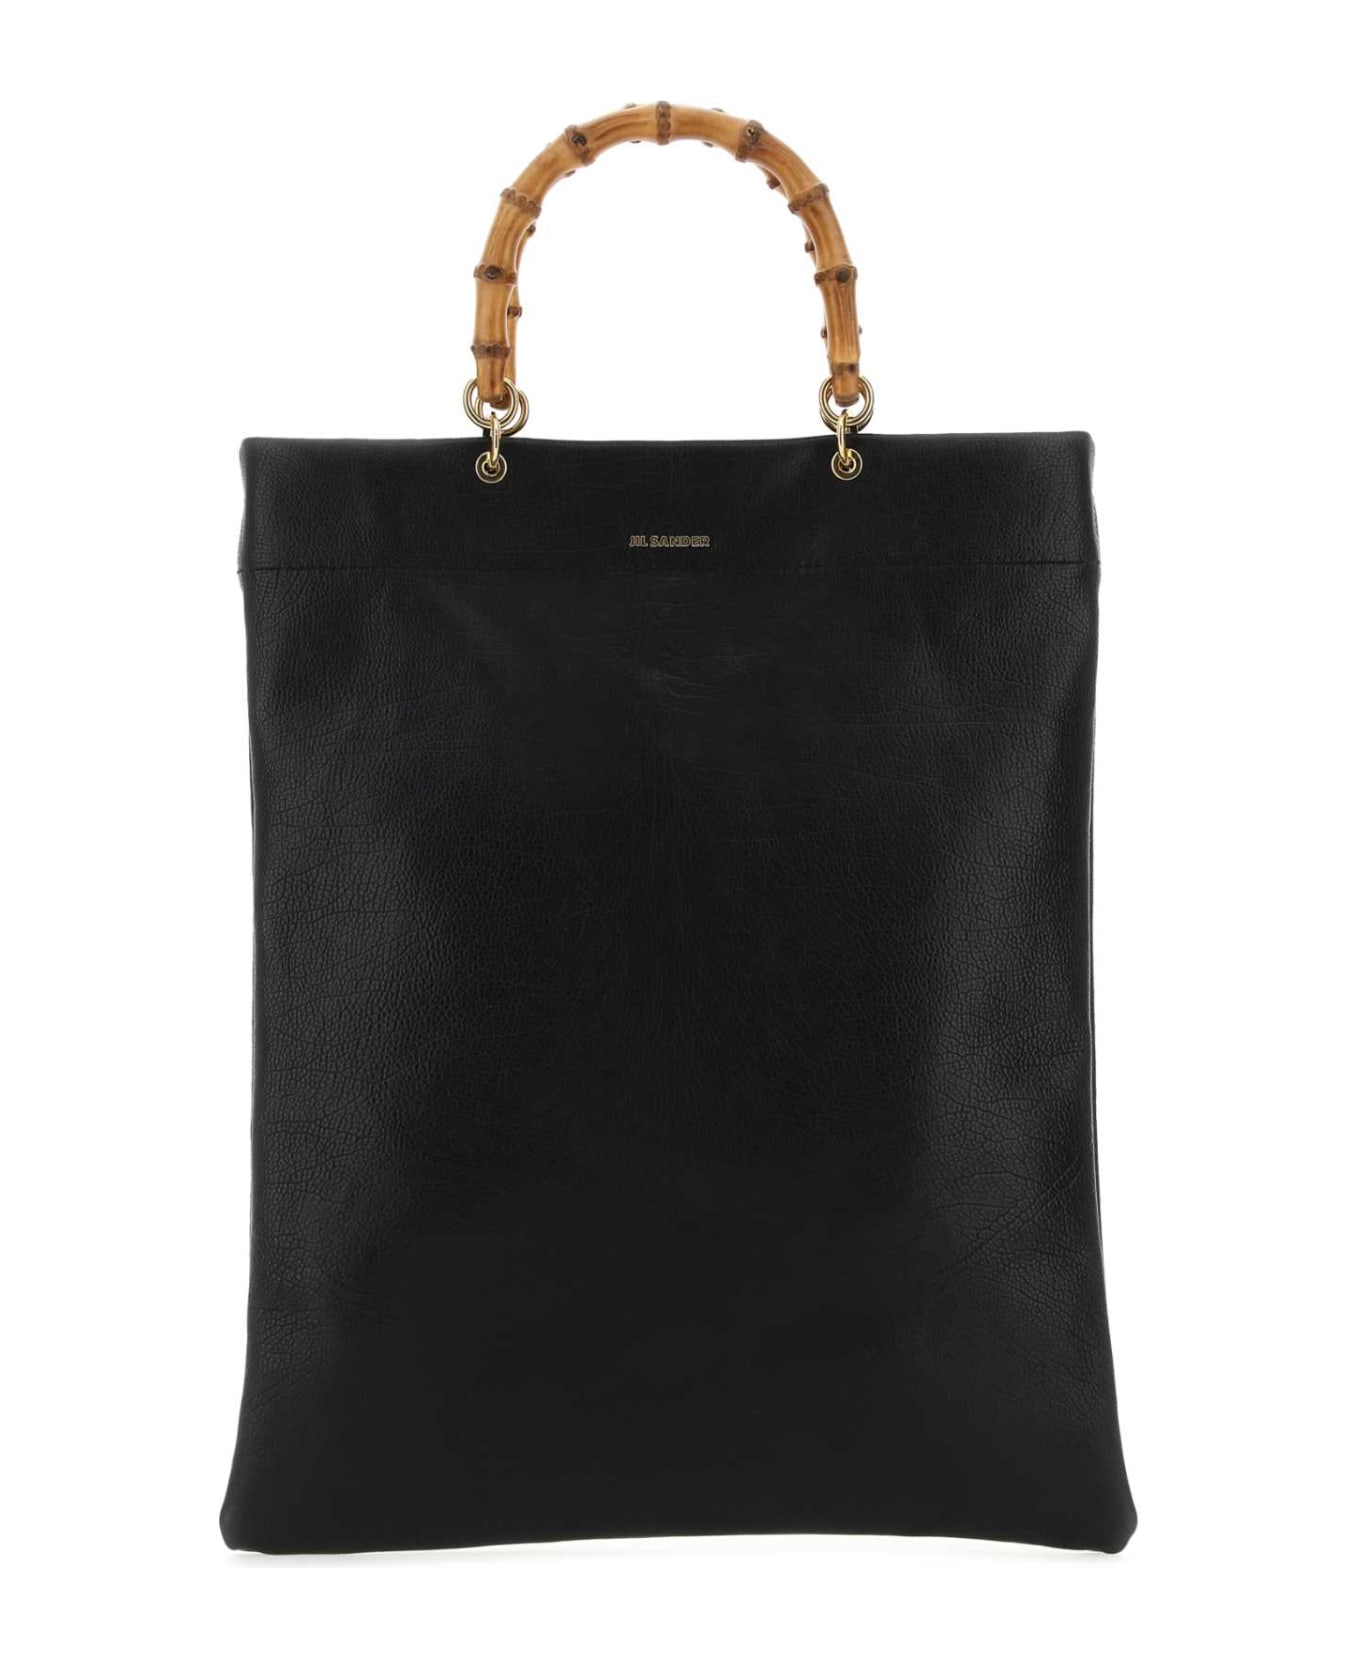 Jil Sander Black Leather Medium Shopping Bag - 001 トートバッグ